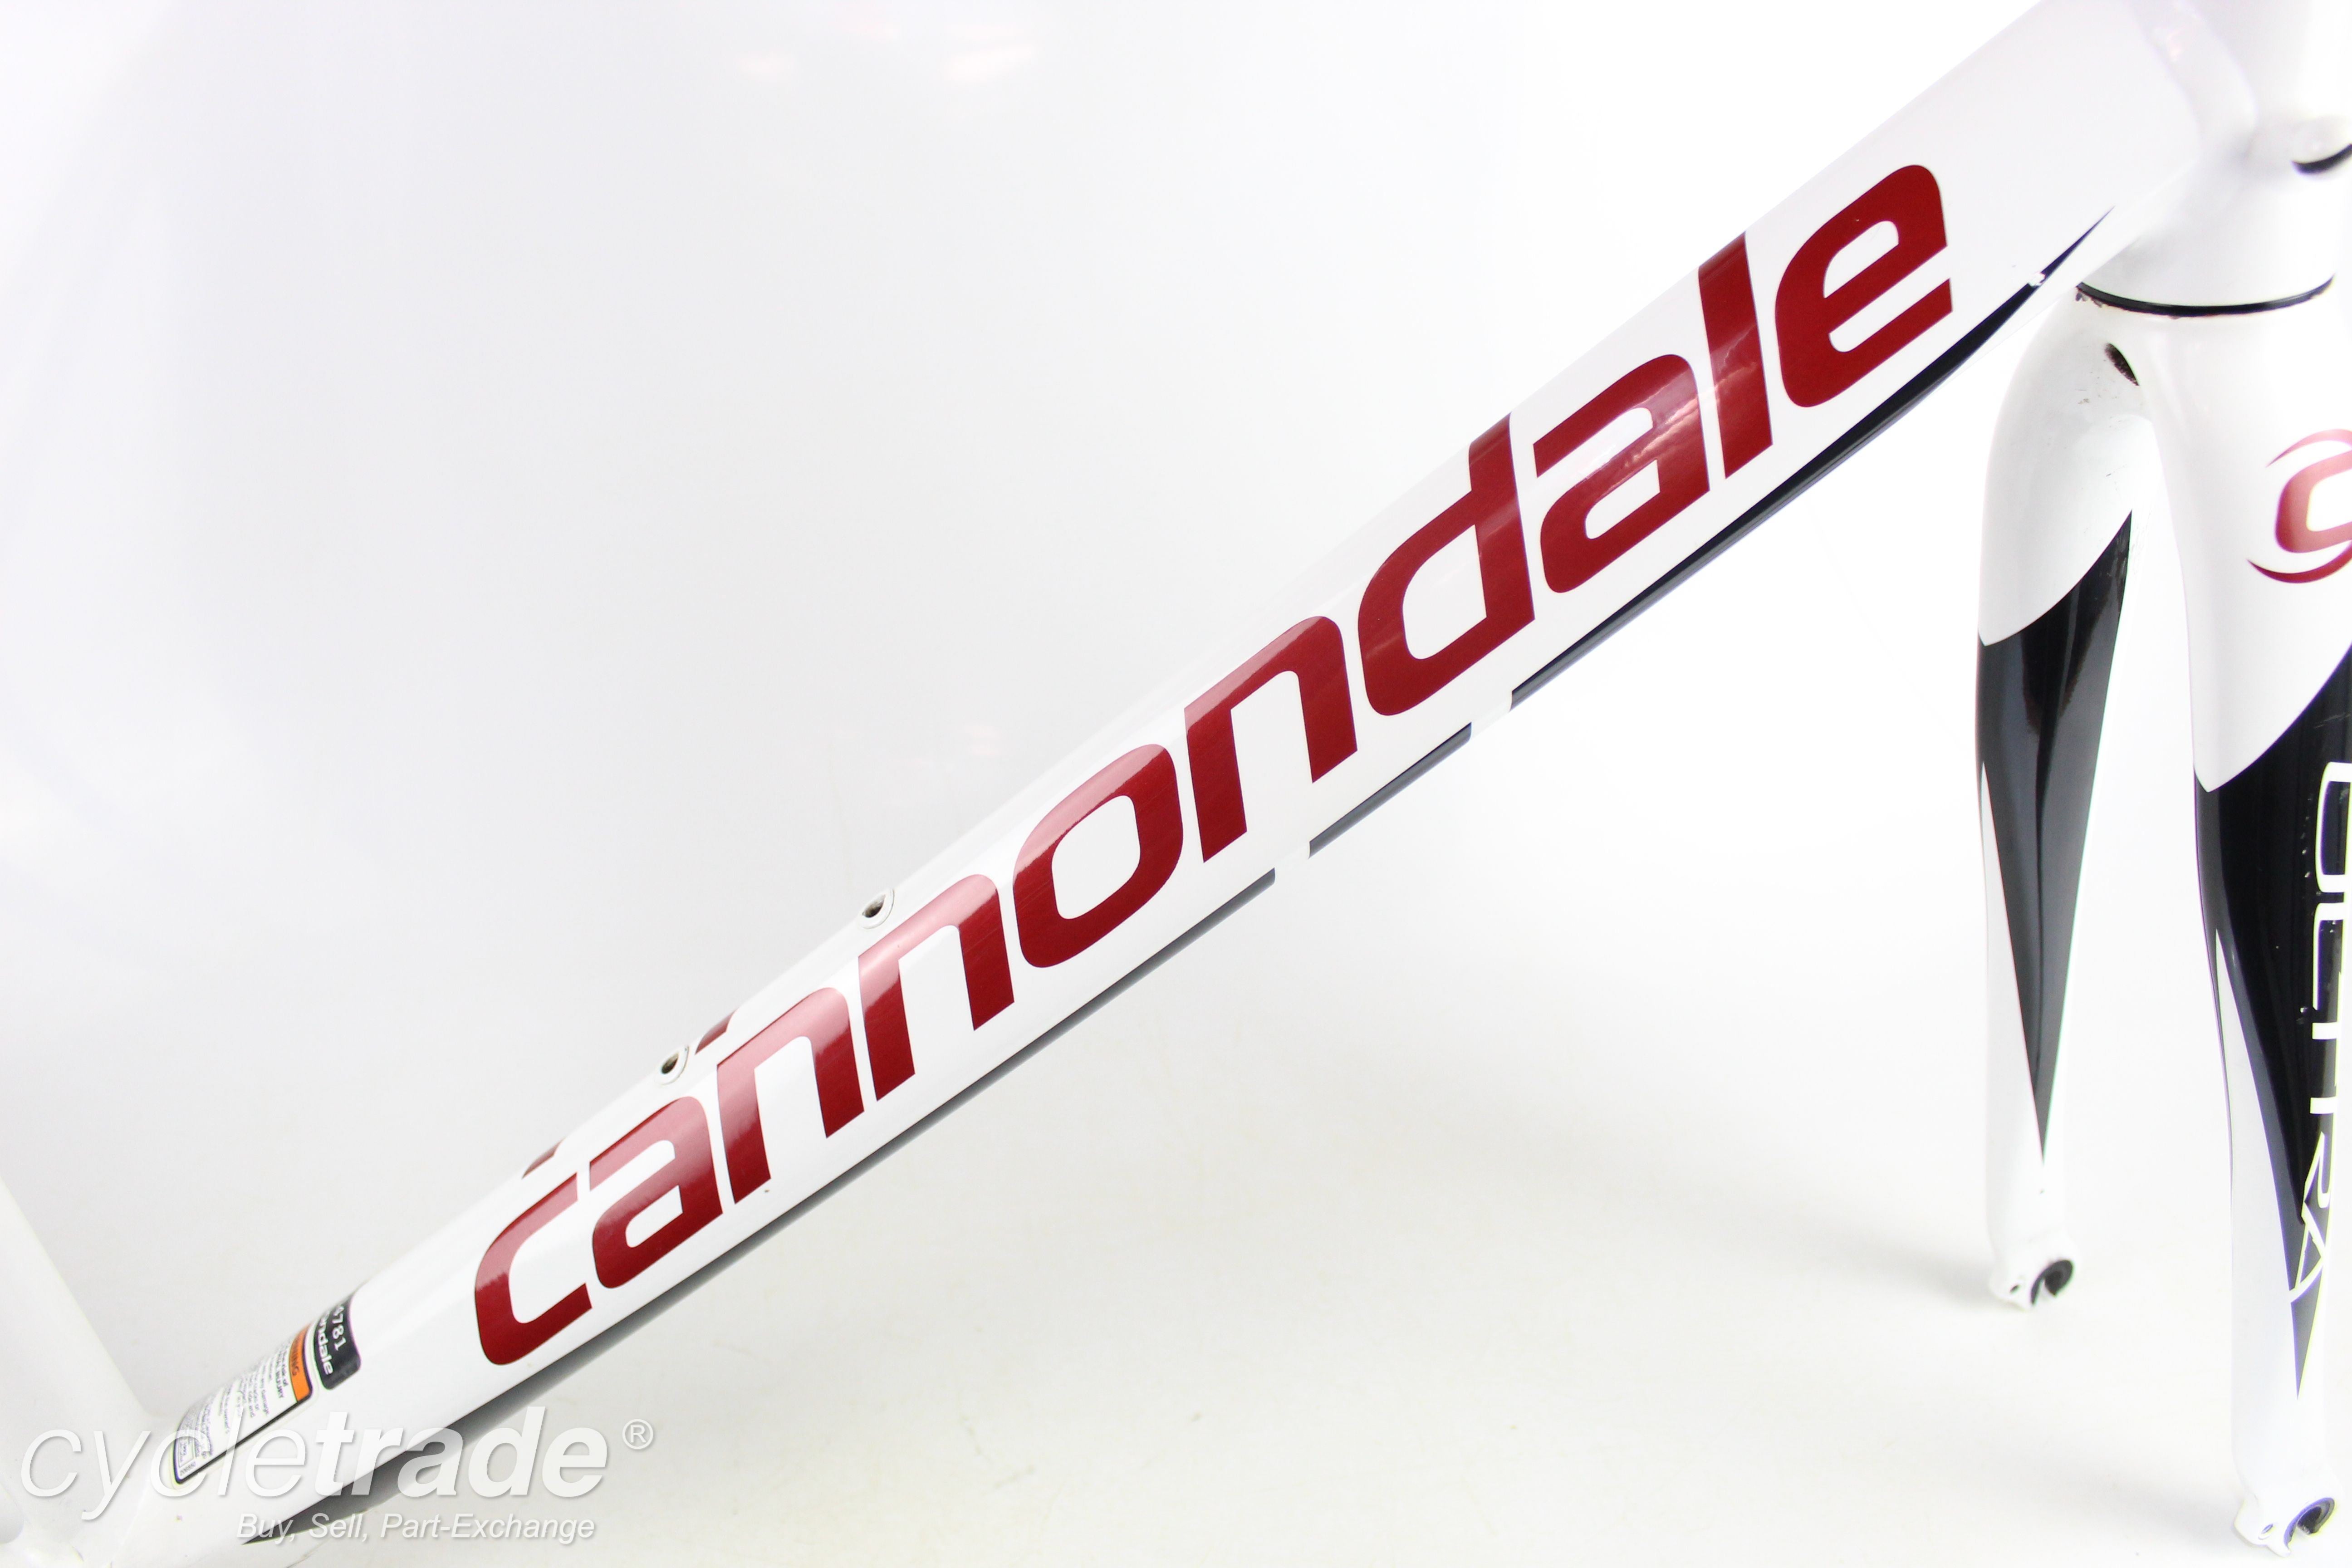 700c Road Frameset - Cannondale Synapse, 56cm - Grade C+